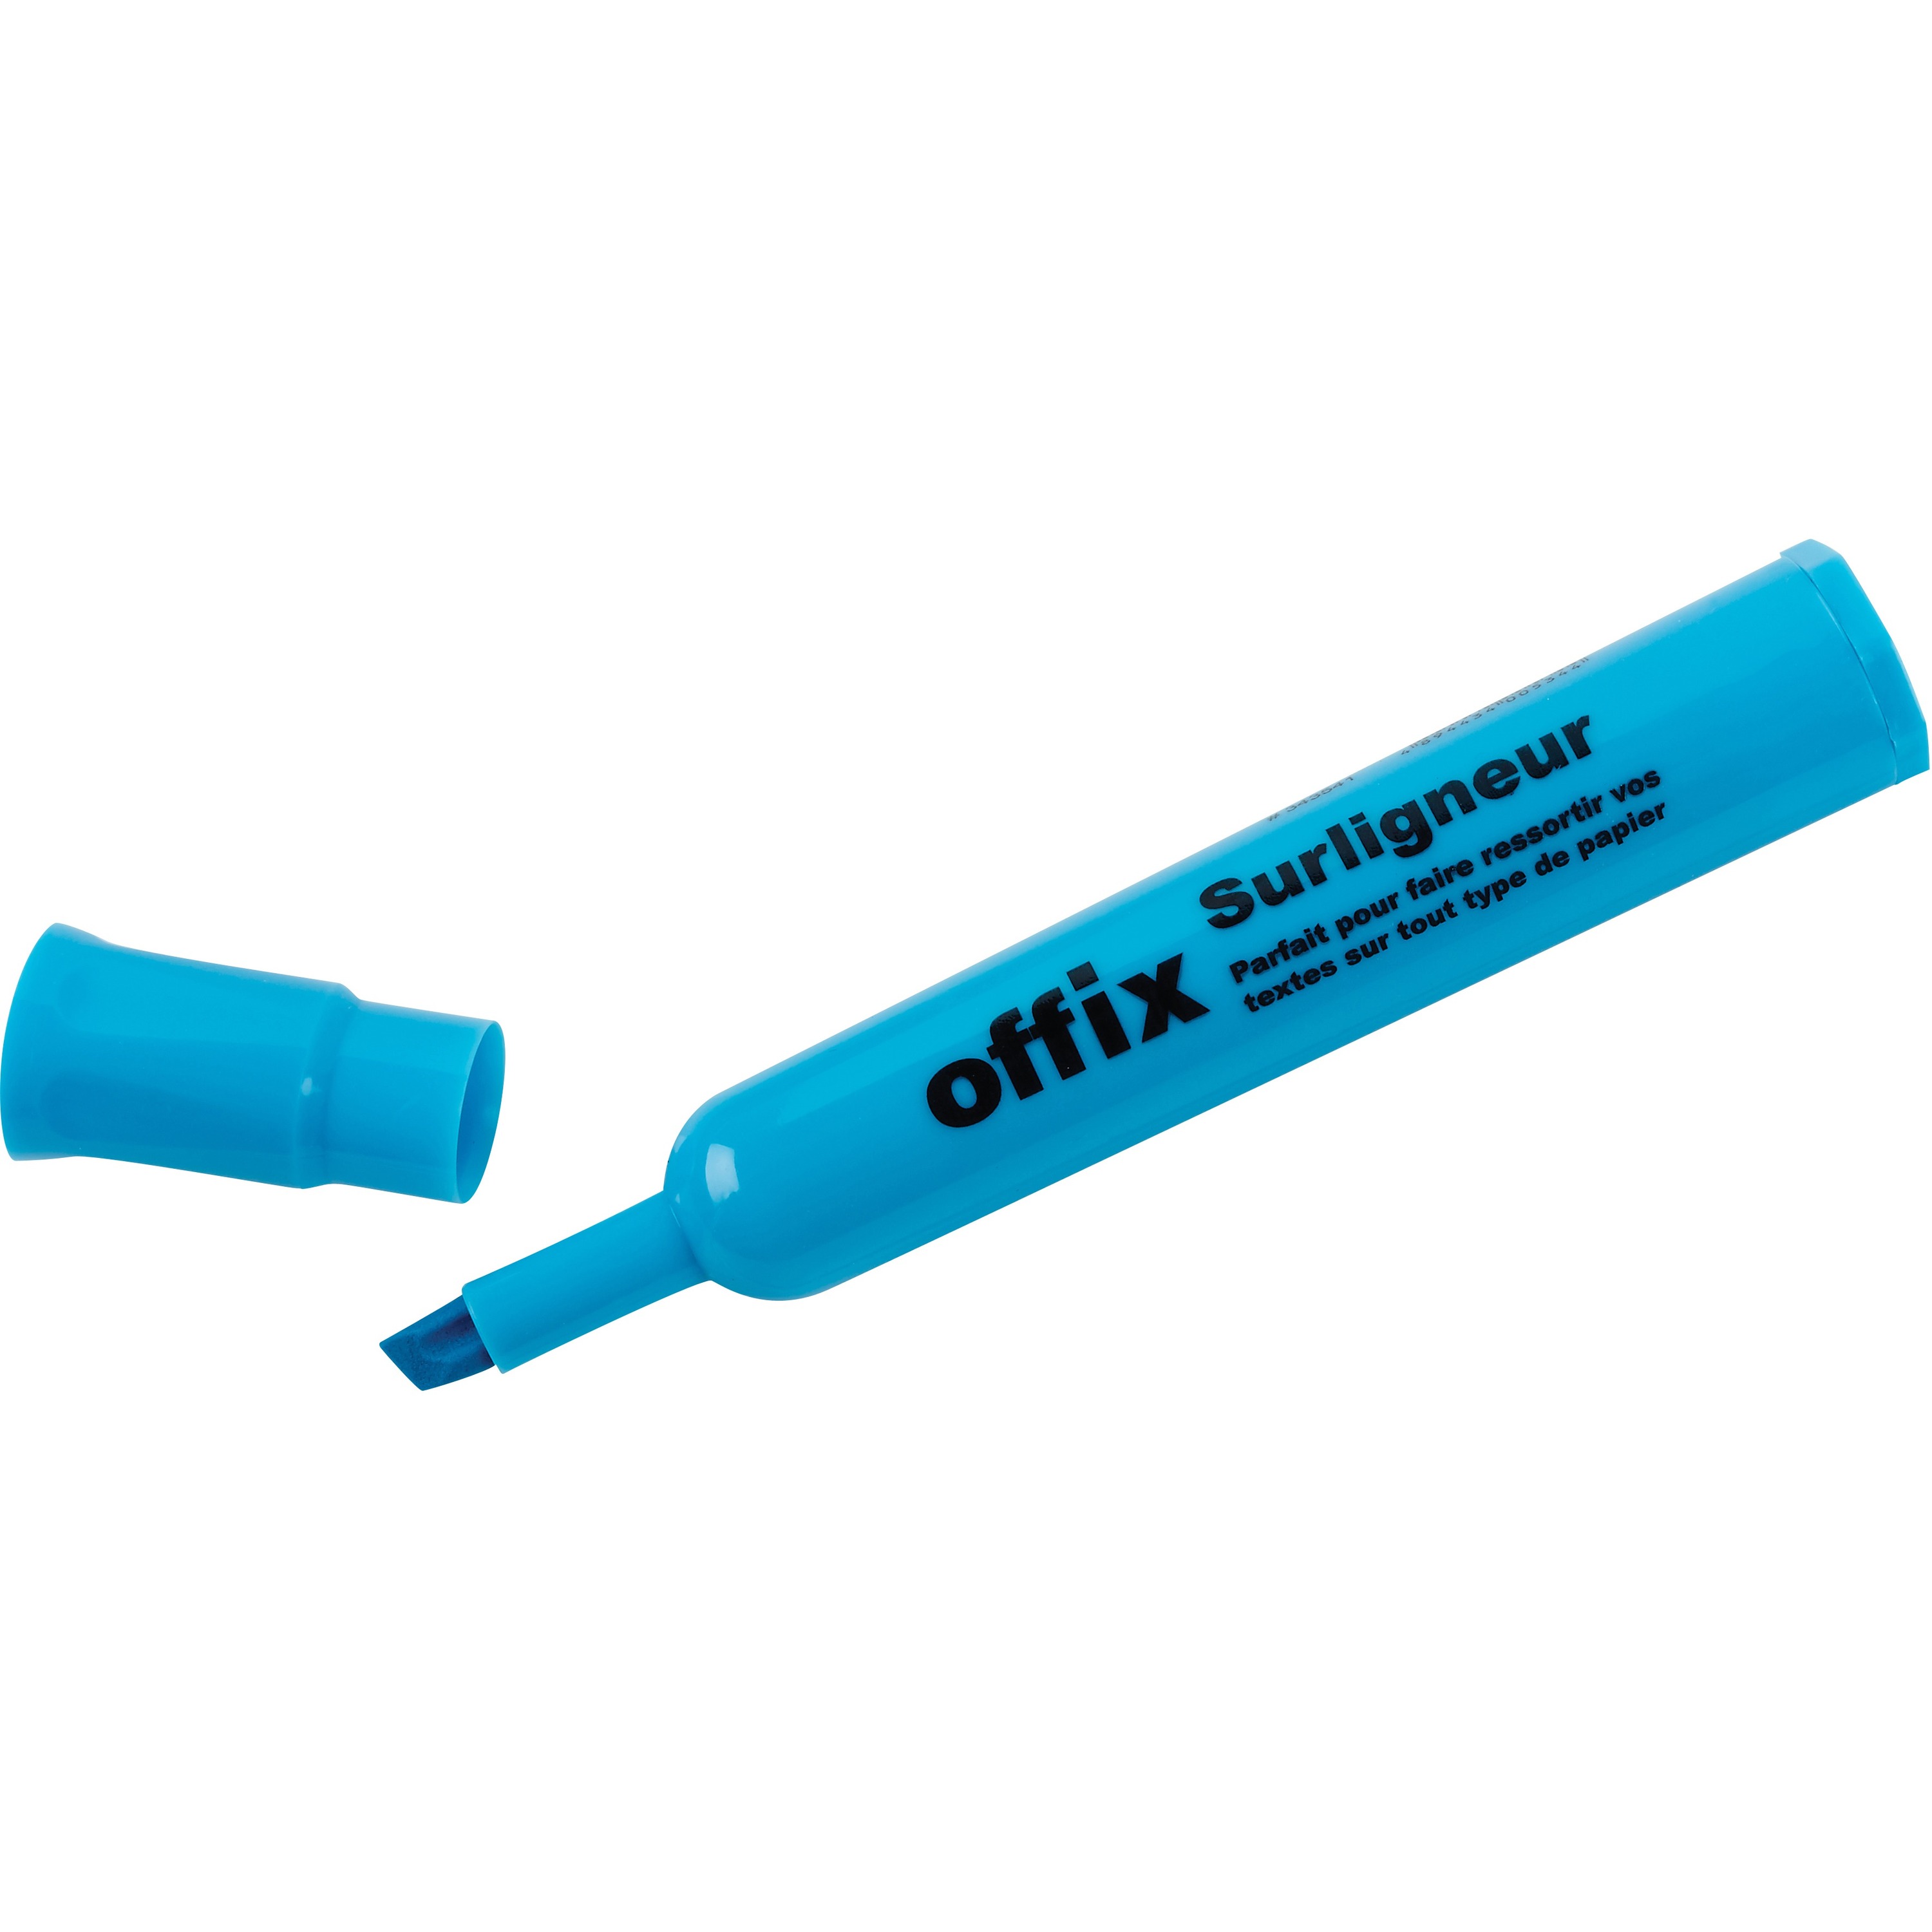 Offix Highlighter - Chisel Marker Point Style - Blue - 1 Dozen